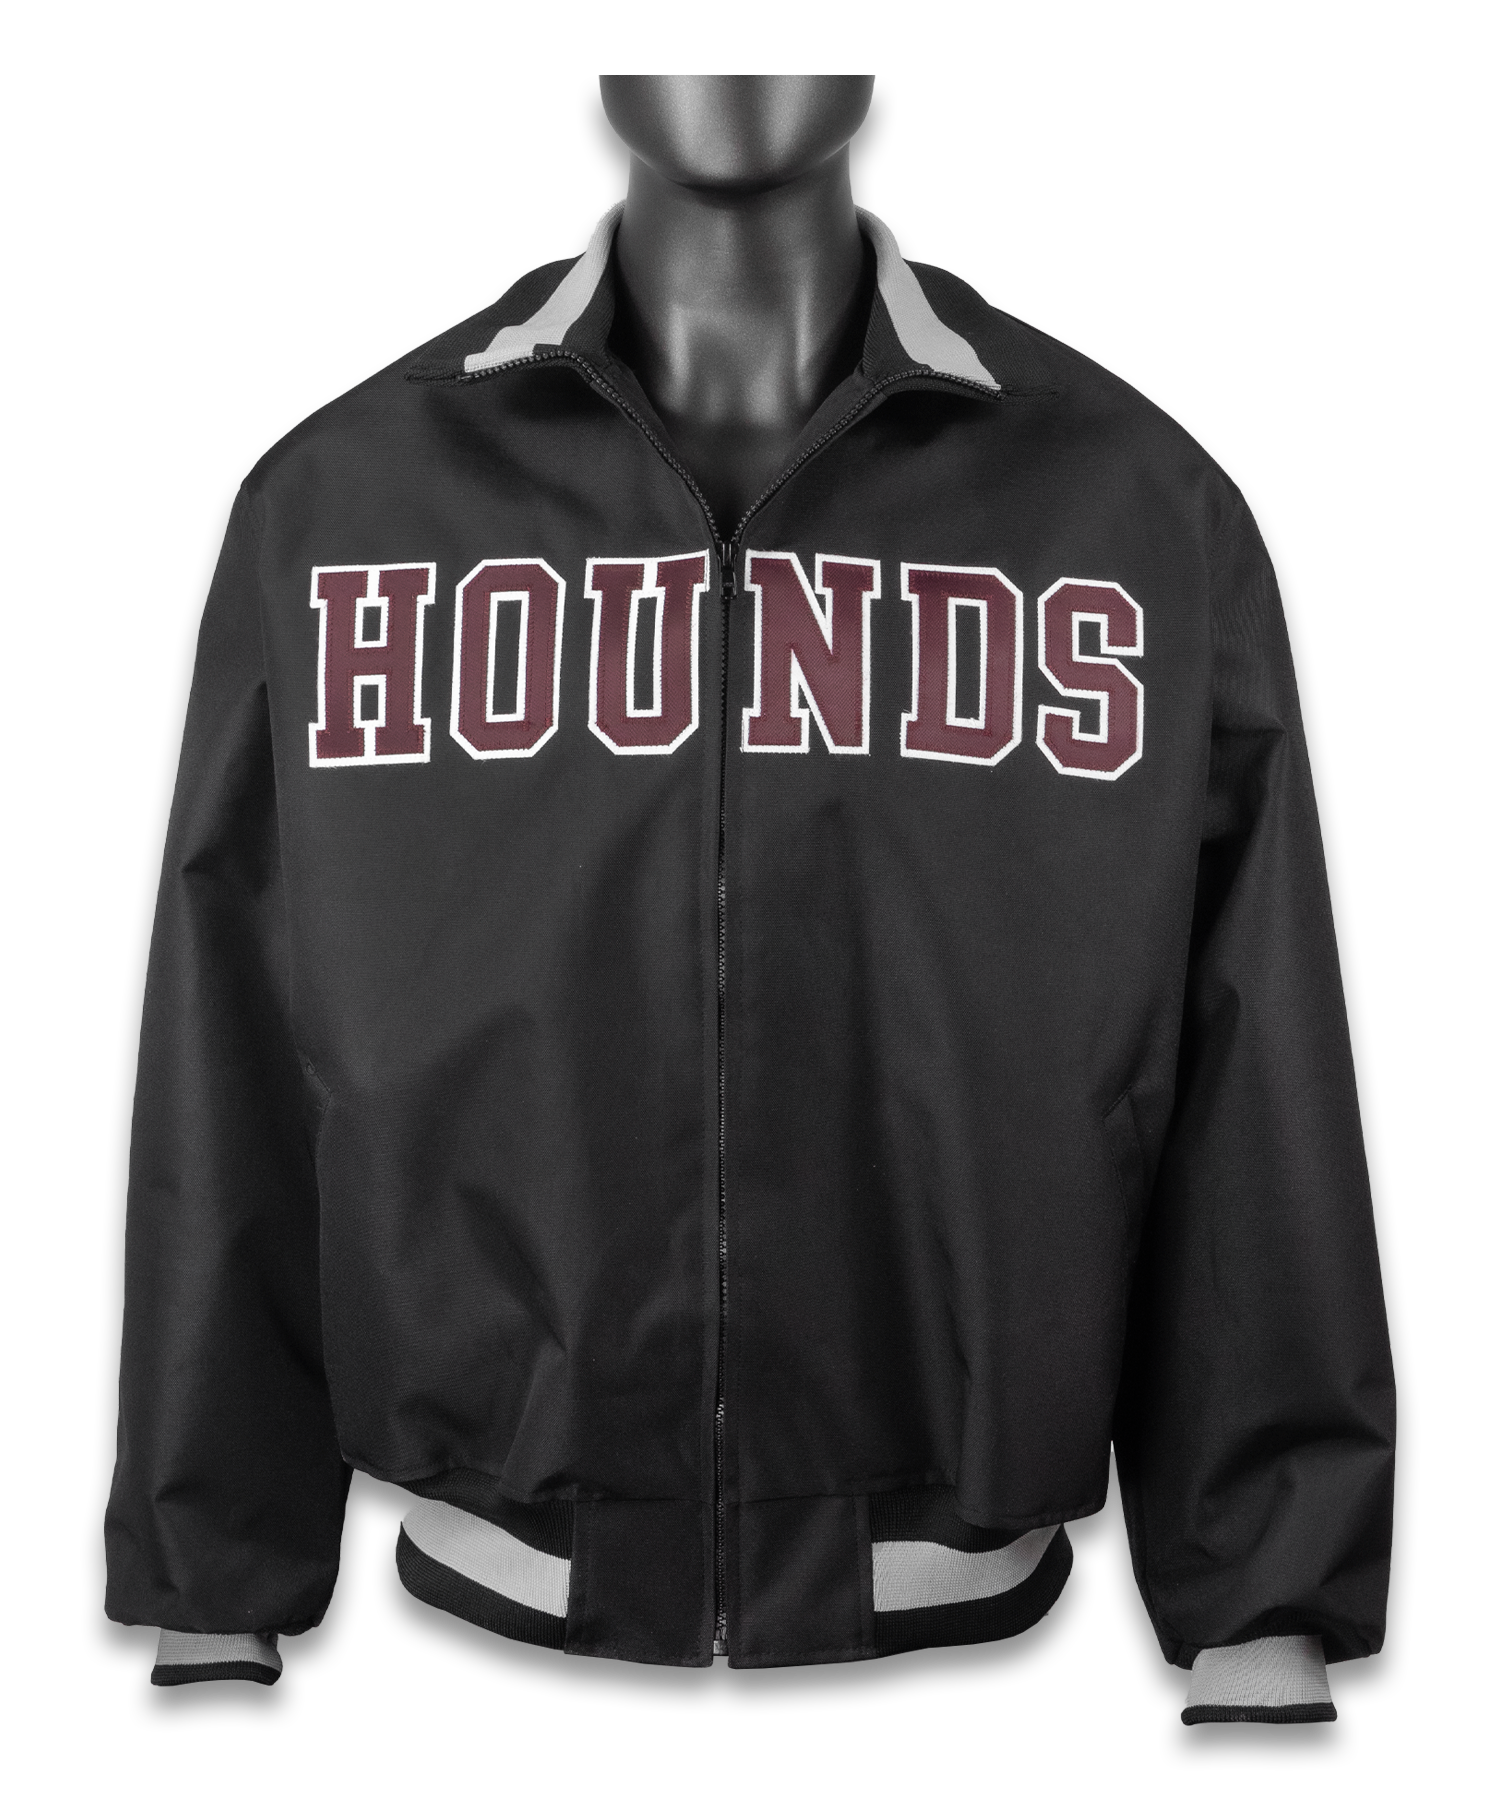 Custom Heritage Jacket - Harrow Sports